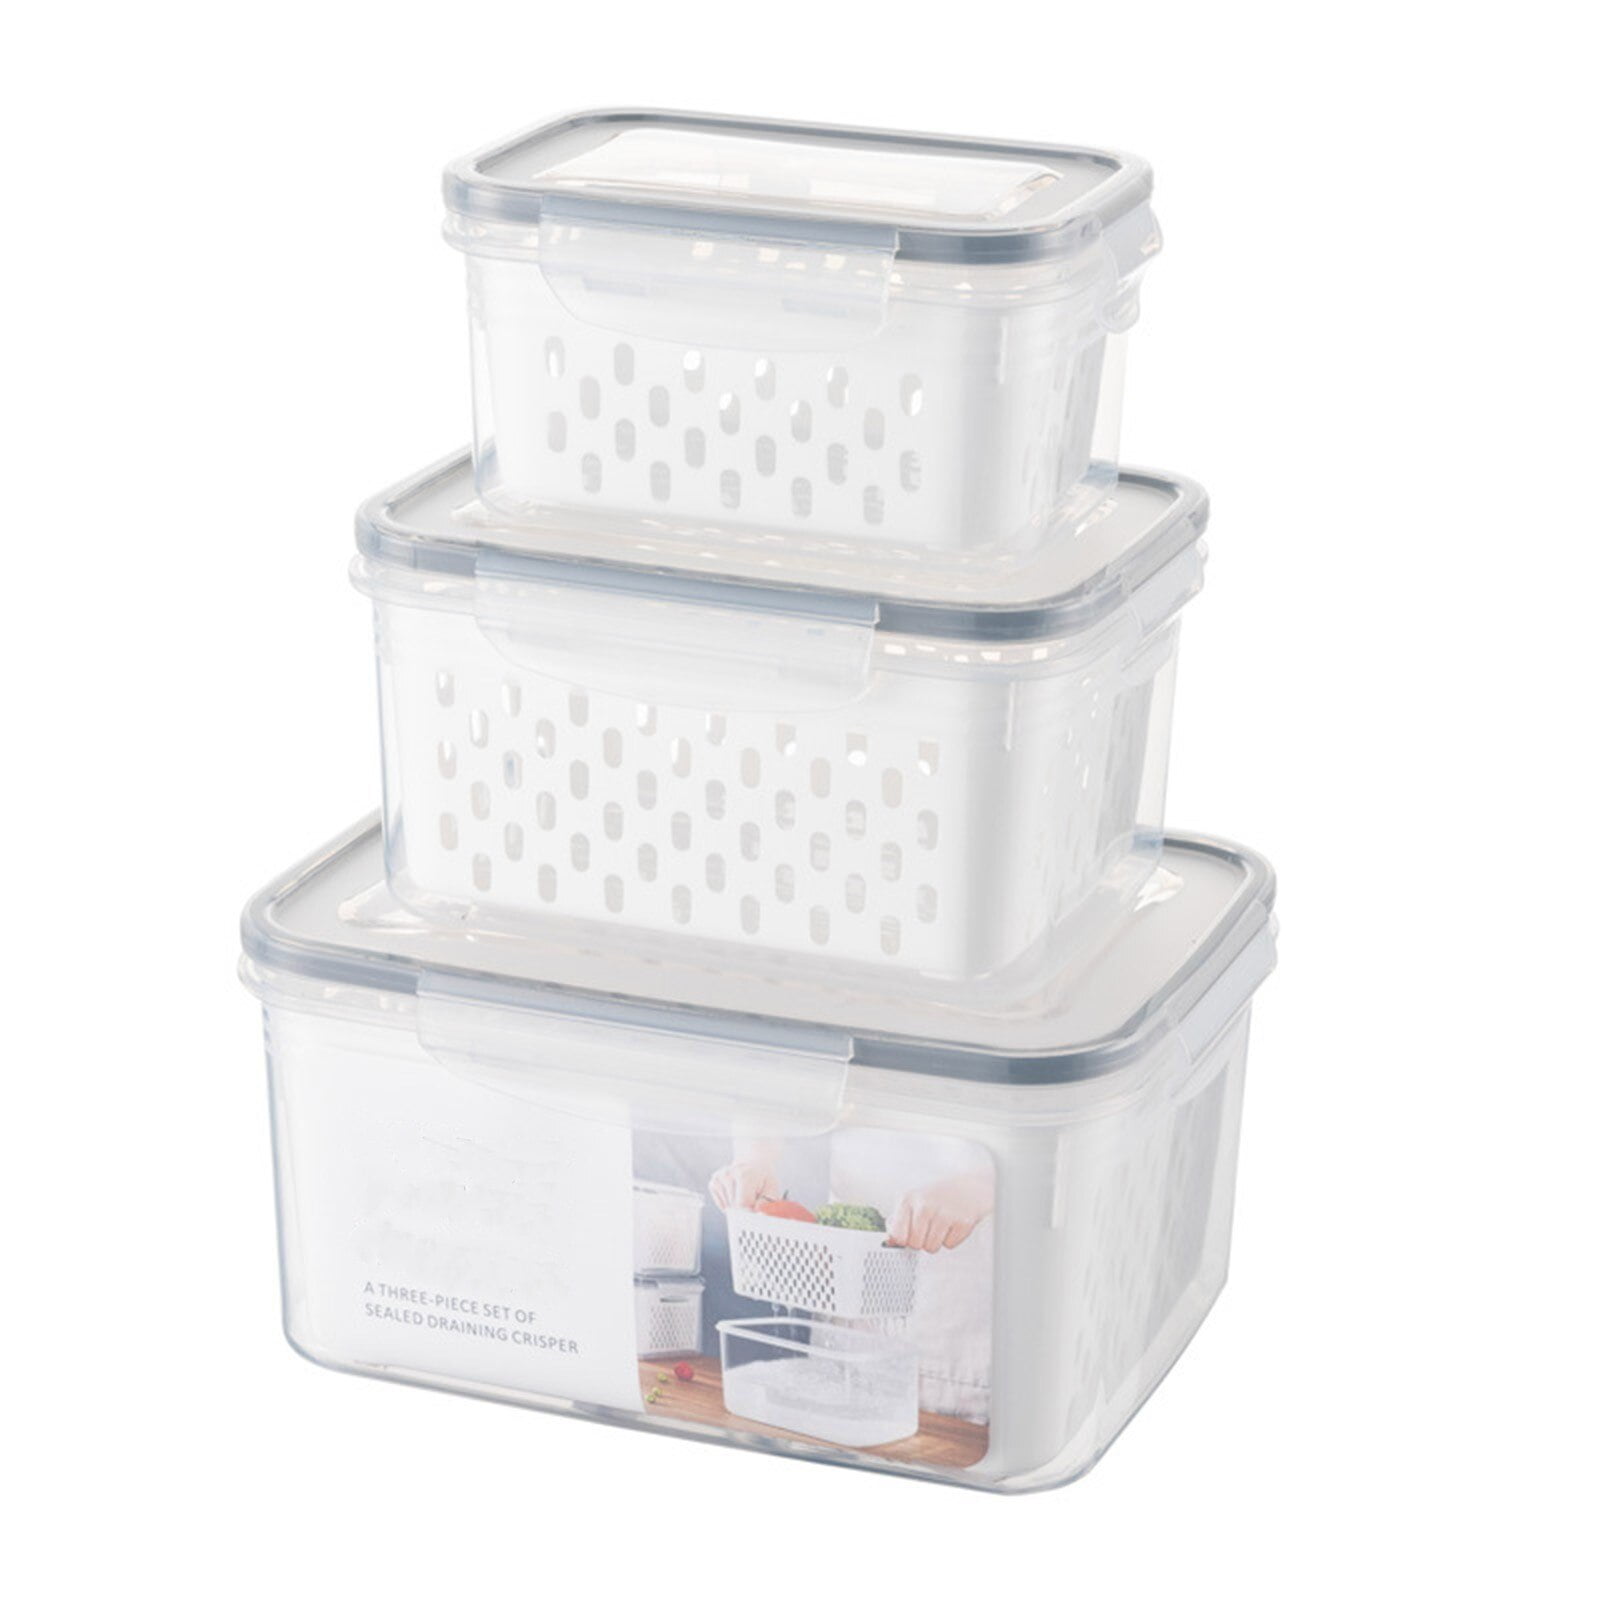 RORPOIR 2pcs Box Crisper Fridge Storage Containers for Fridge Produce Saver  Containers Sealable Containers Fruit Containers Fridge Food Container